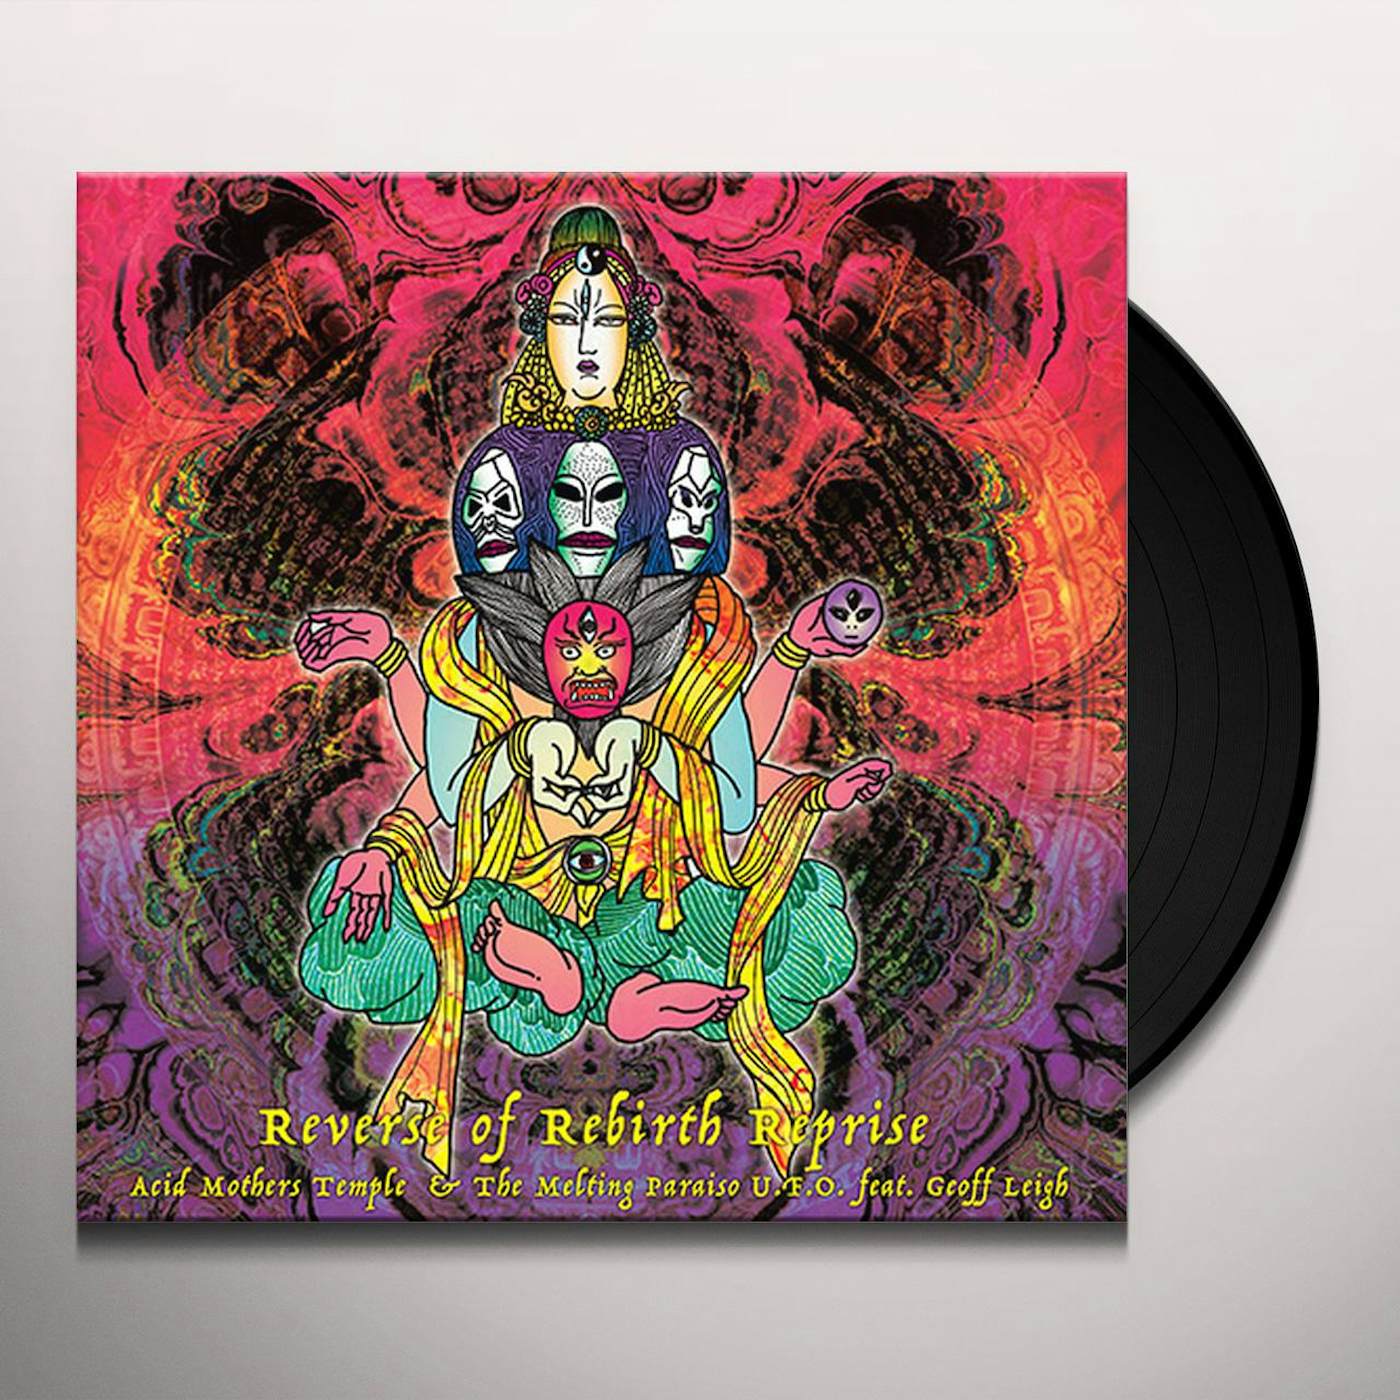 Acid Mothers Temple & Melting Paraiso U.F.O. REVERSE OF REBIRTH REPRISE Vinyl Record